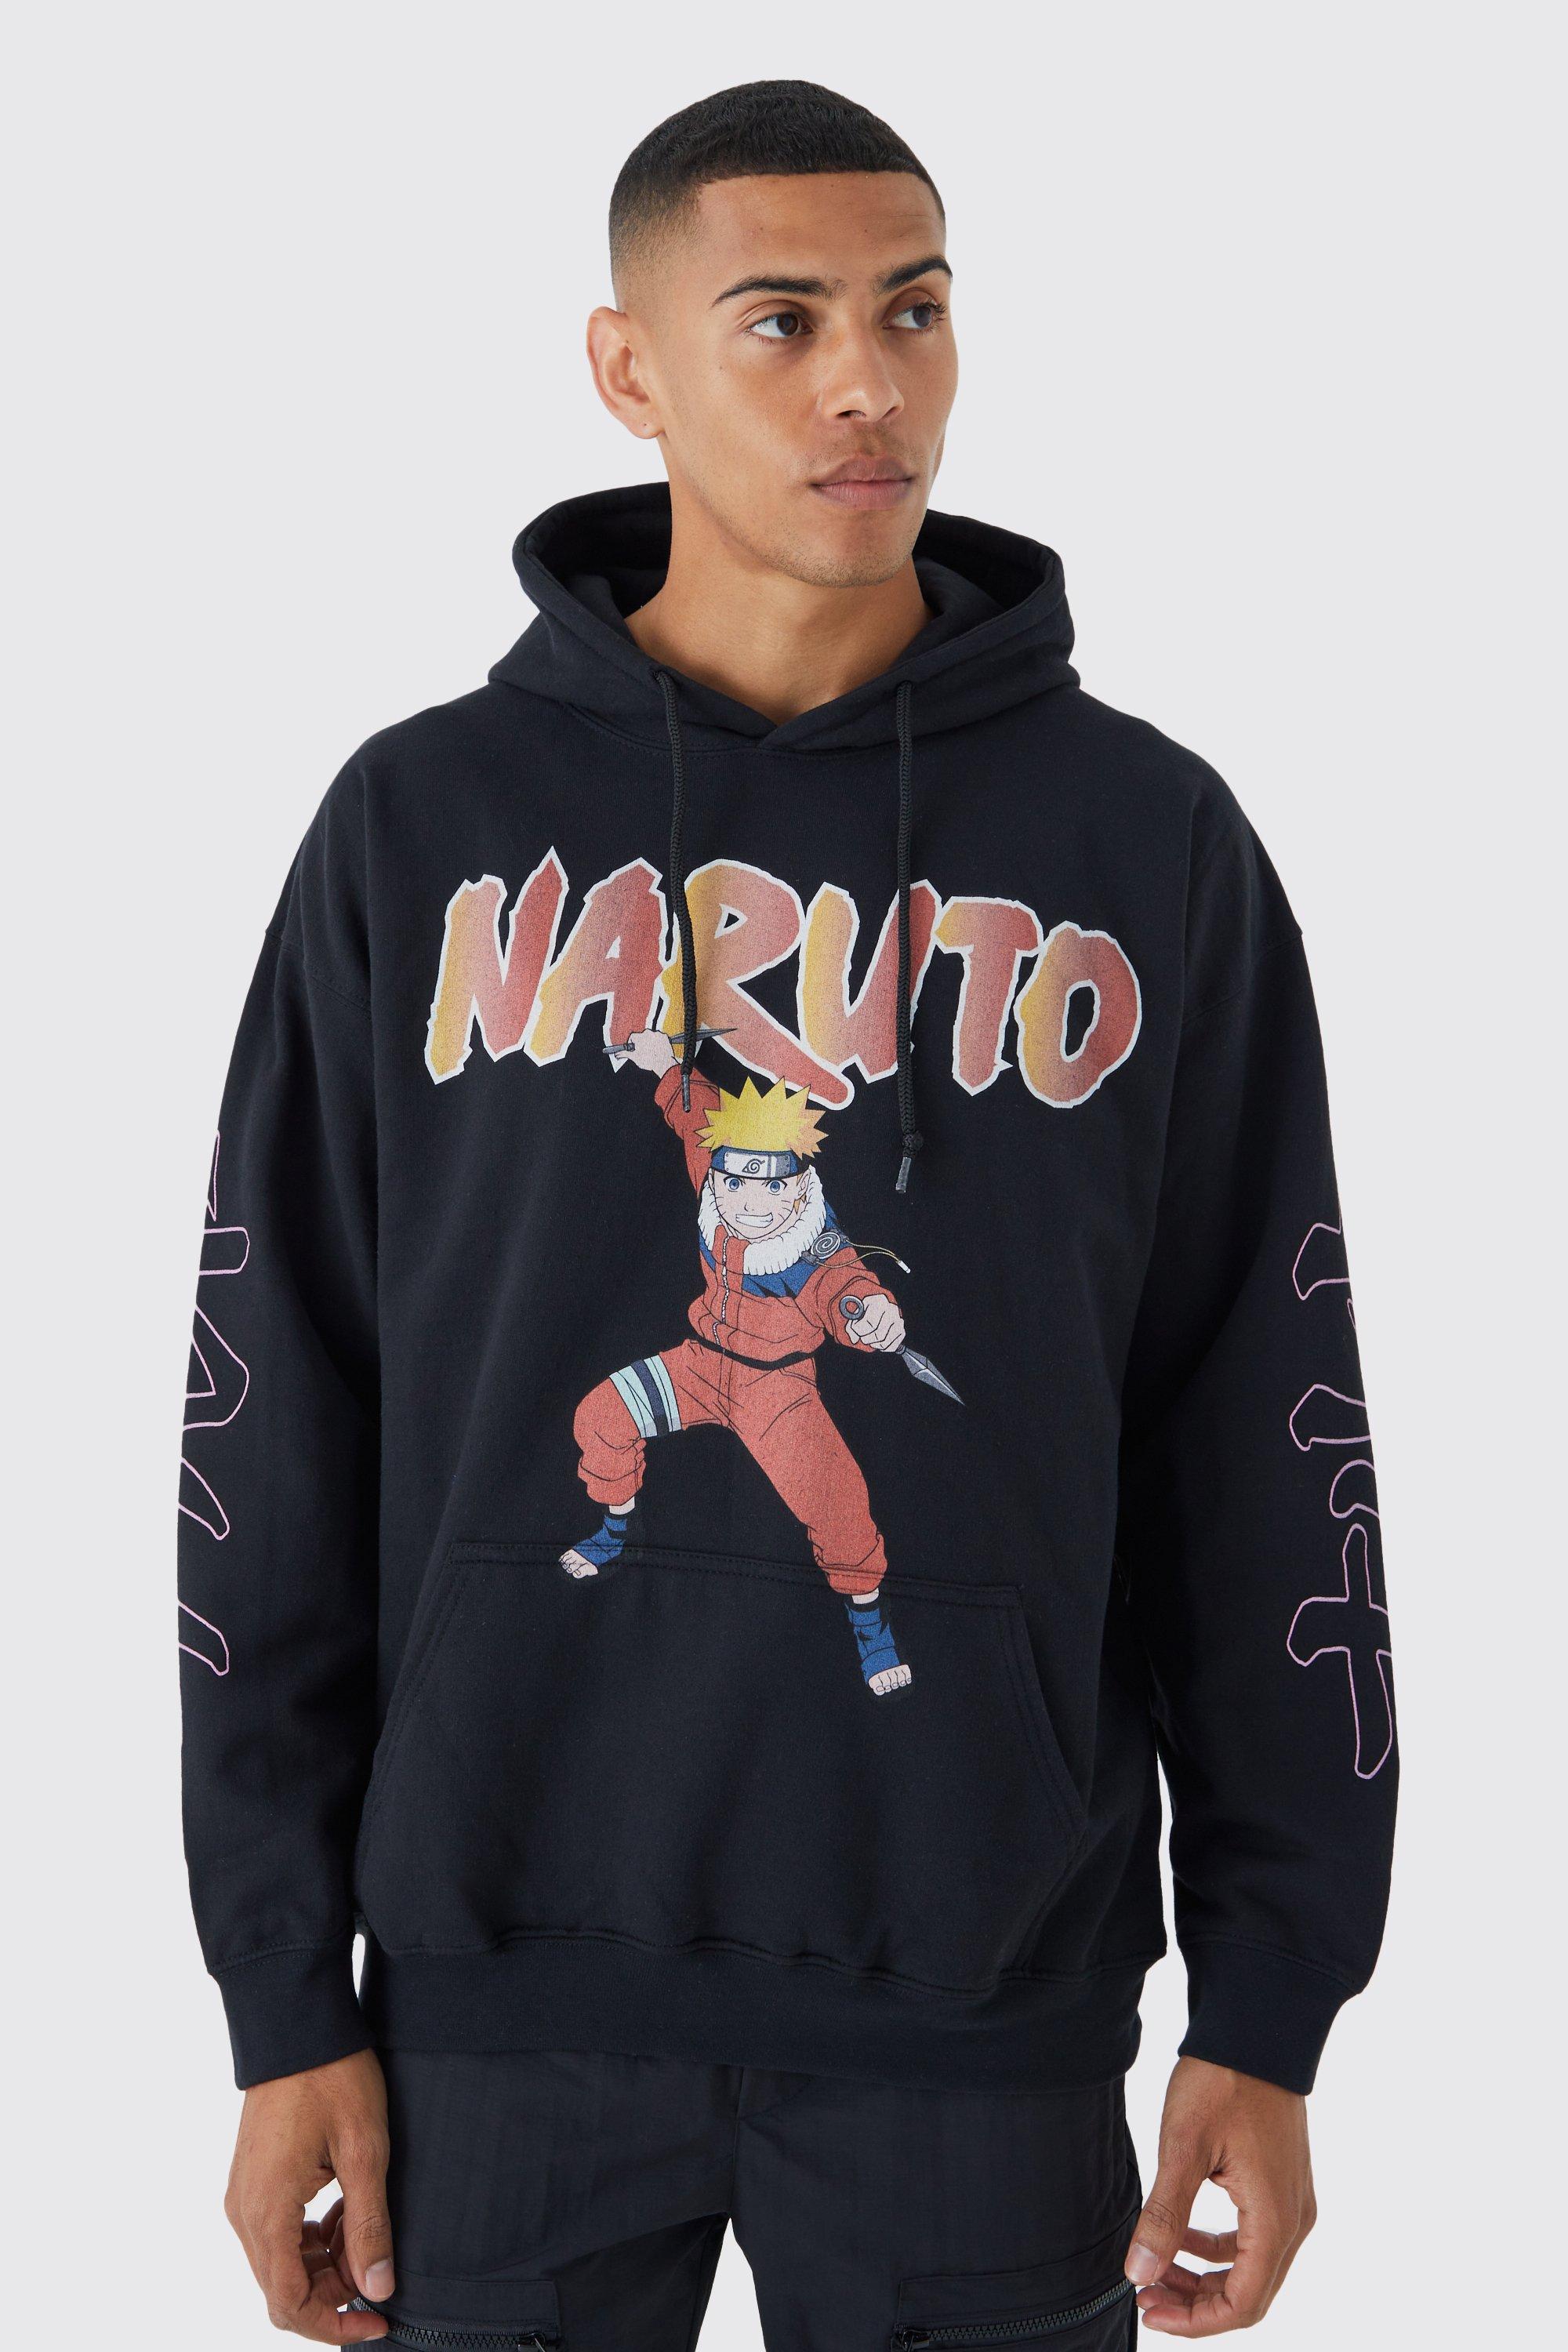 Mens Black Oversized Naruto Anime License Hoodie, Black